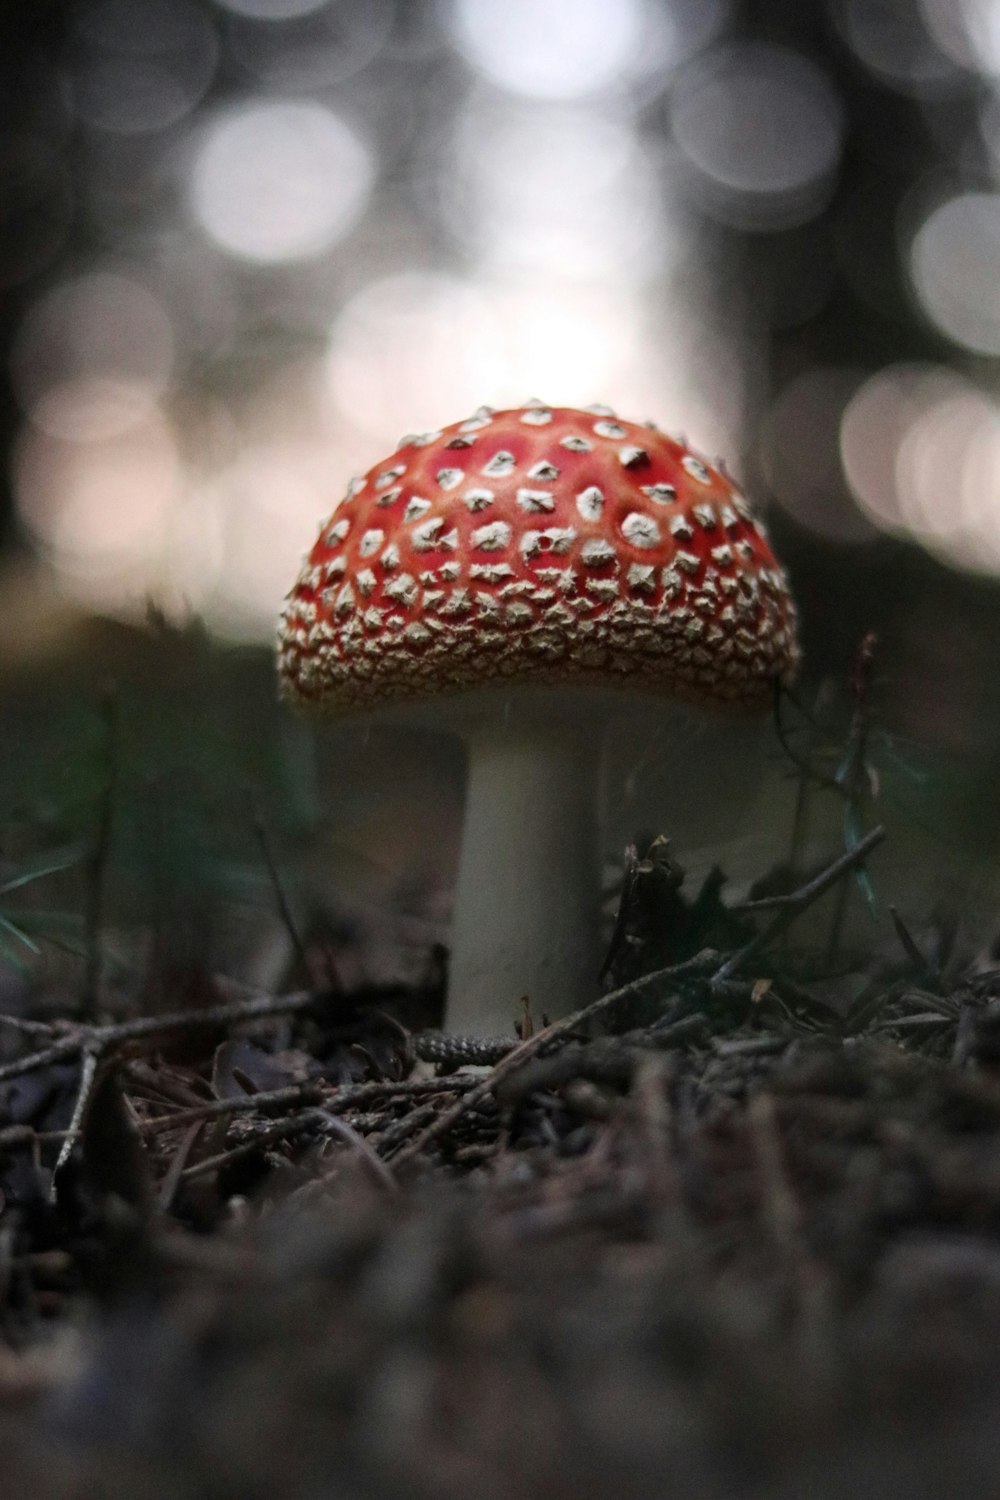 bokeh photography of red mushroom